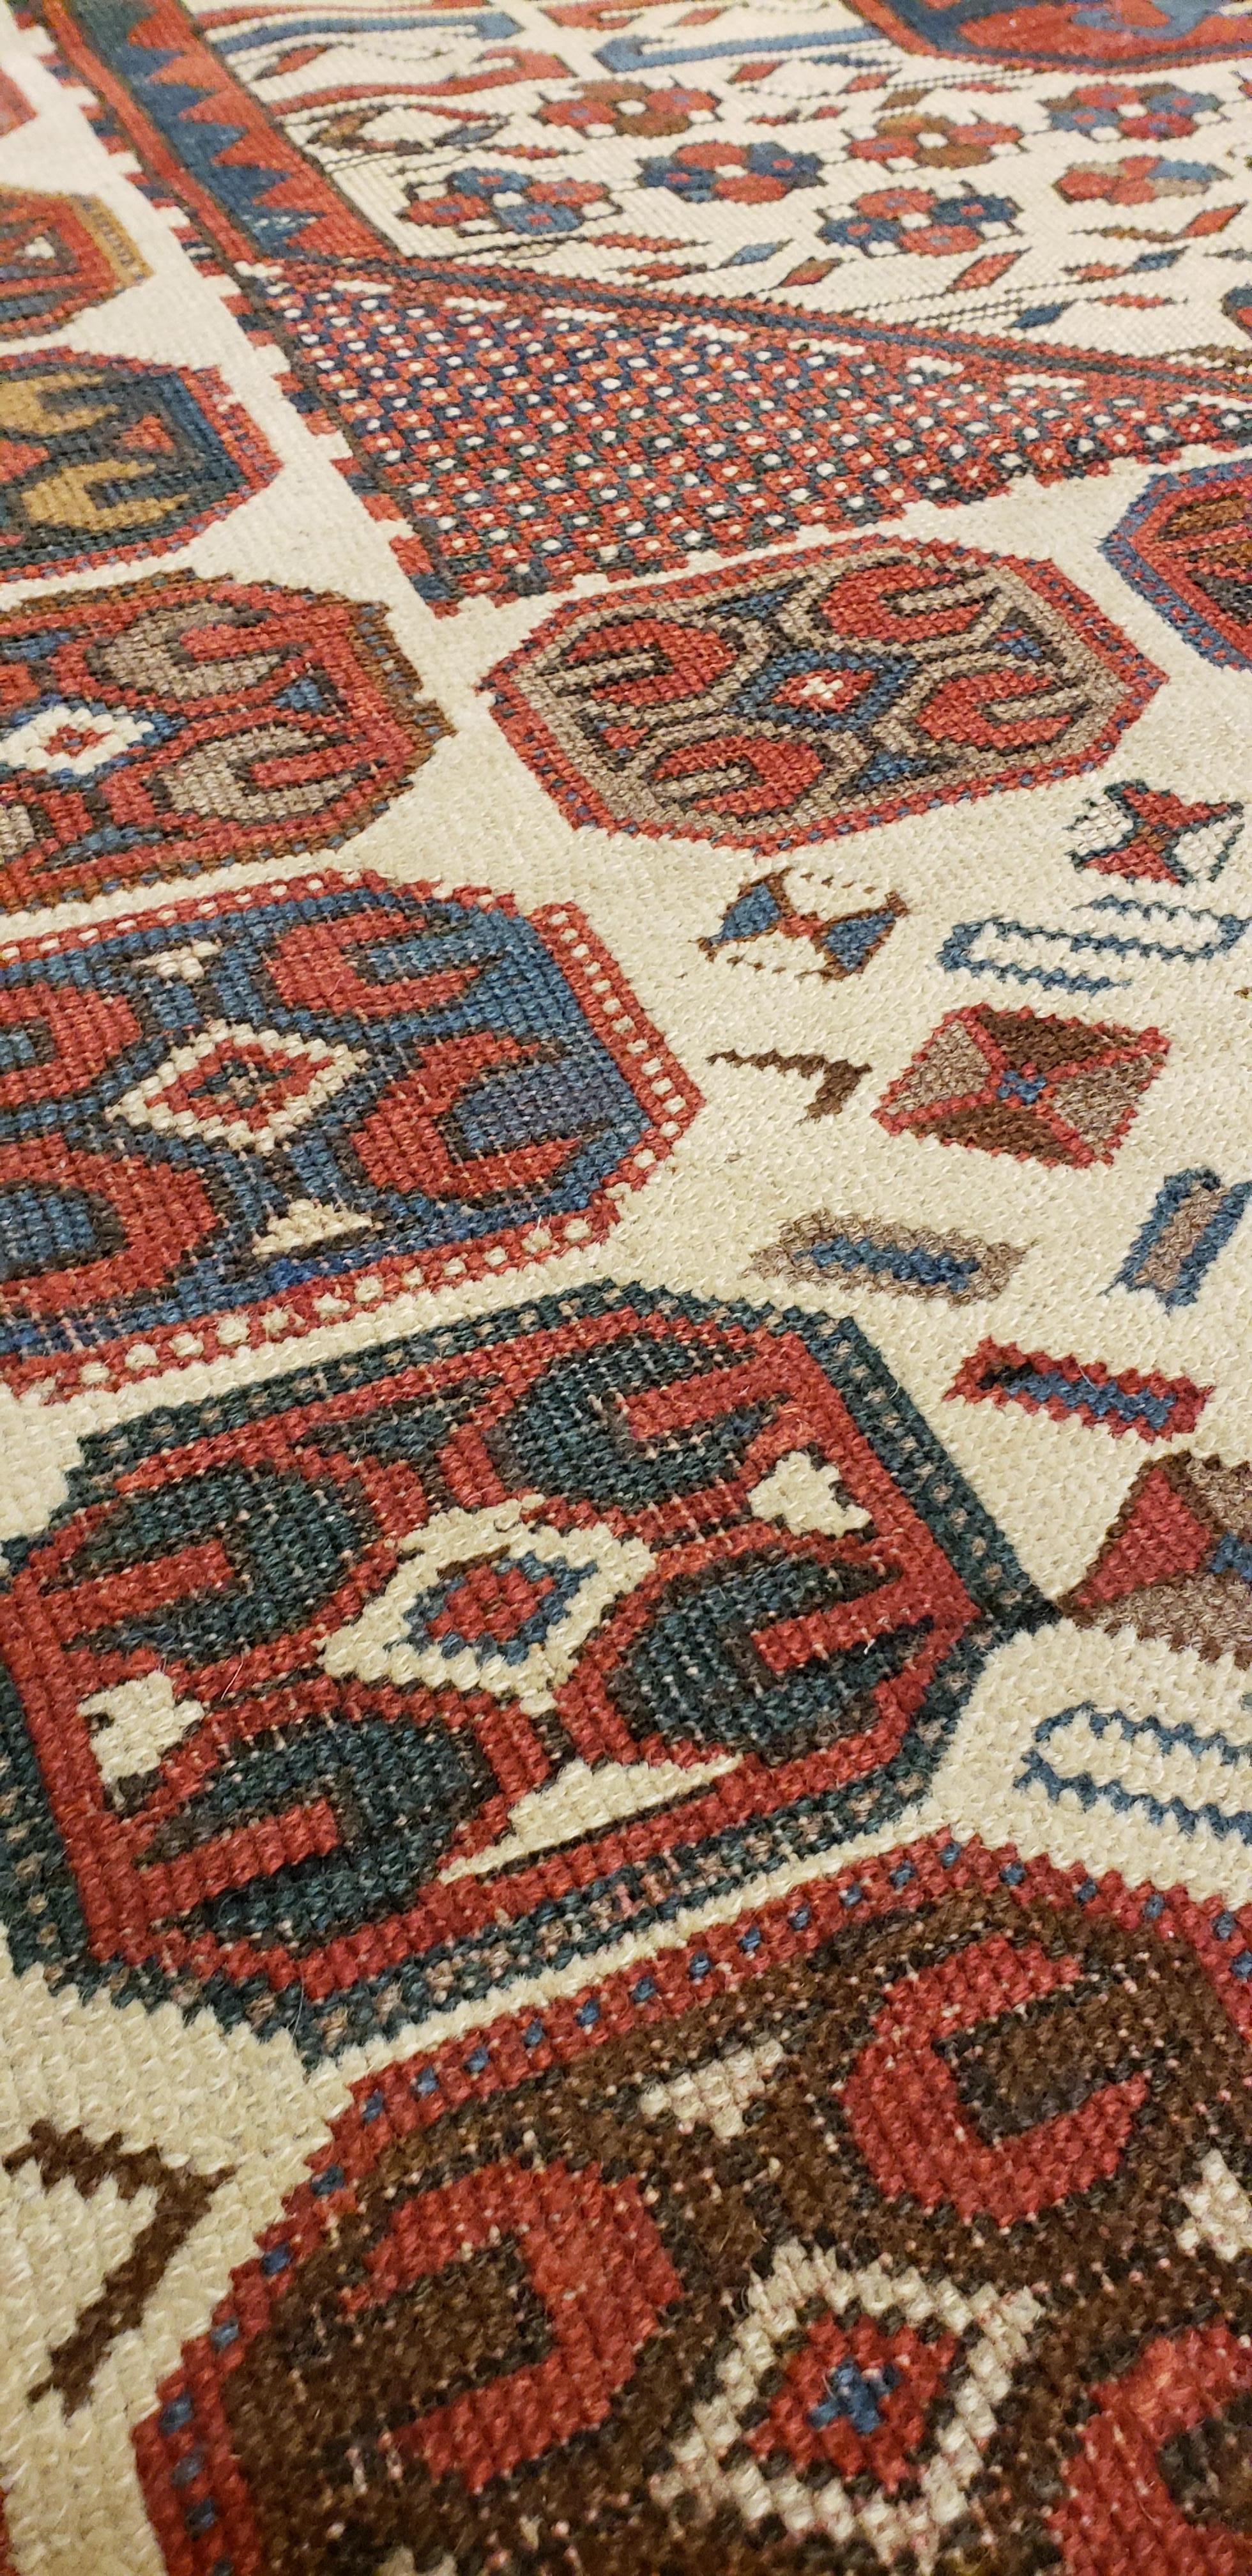 Antique Karachov Kazak Carpet, Handmade Wool, Rust, Ivory, Blue and Geometric For Sale 2